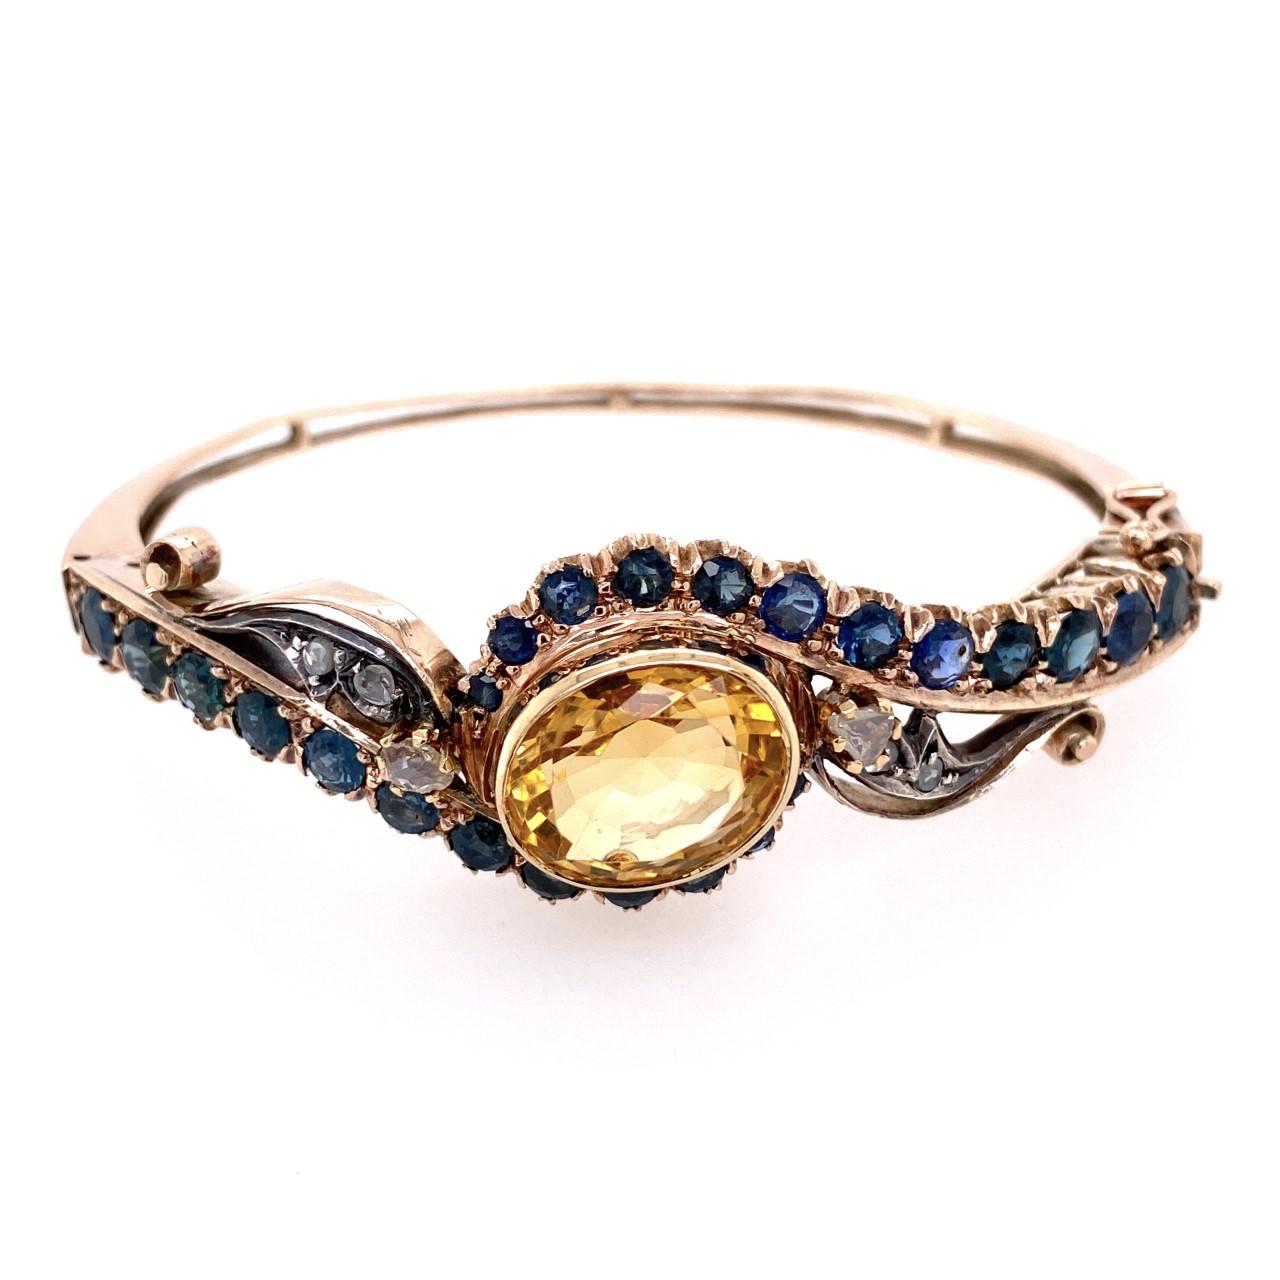 Oval Cut 15 Karat Victorian Bangle Bracelet with Sapphires, Citrine and Diamonds 22.1g